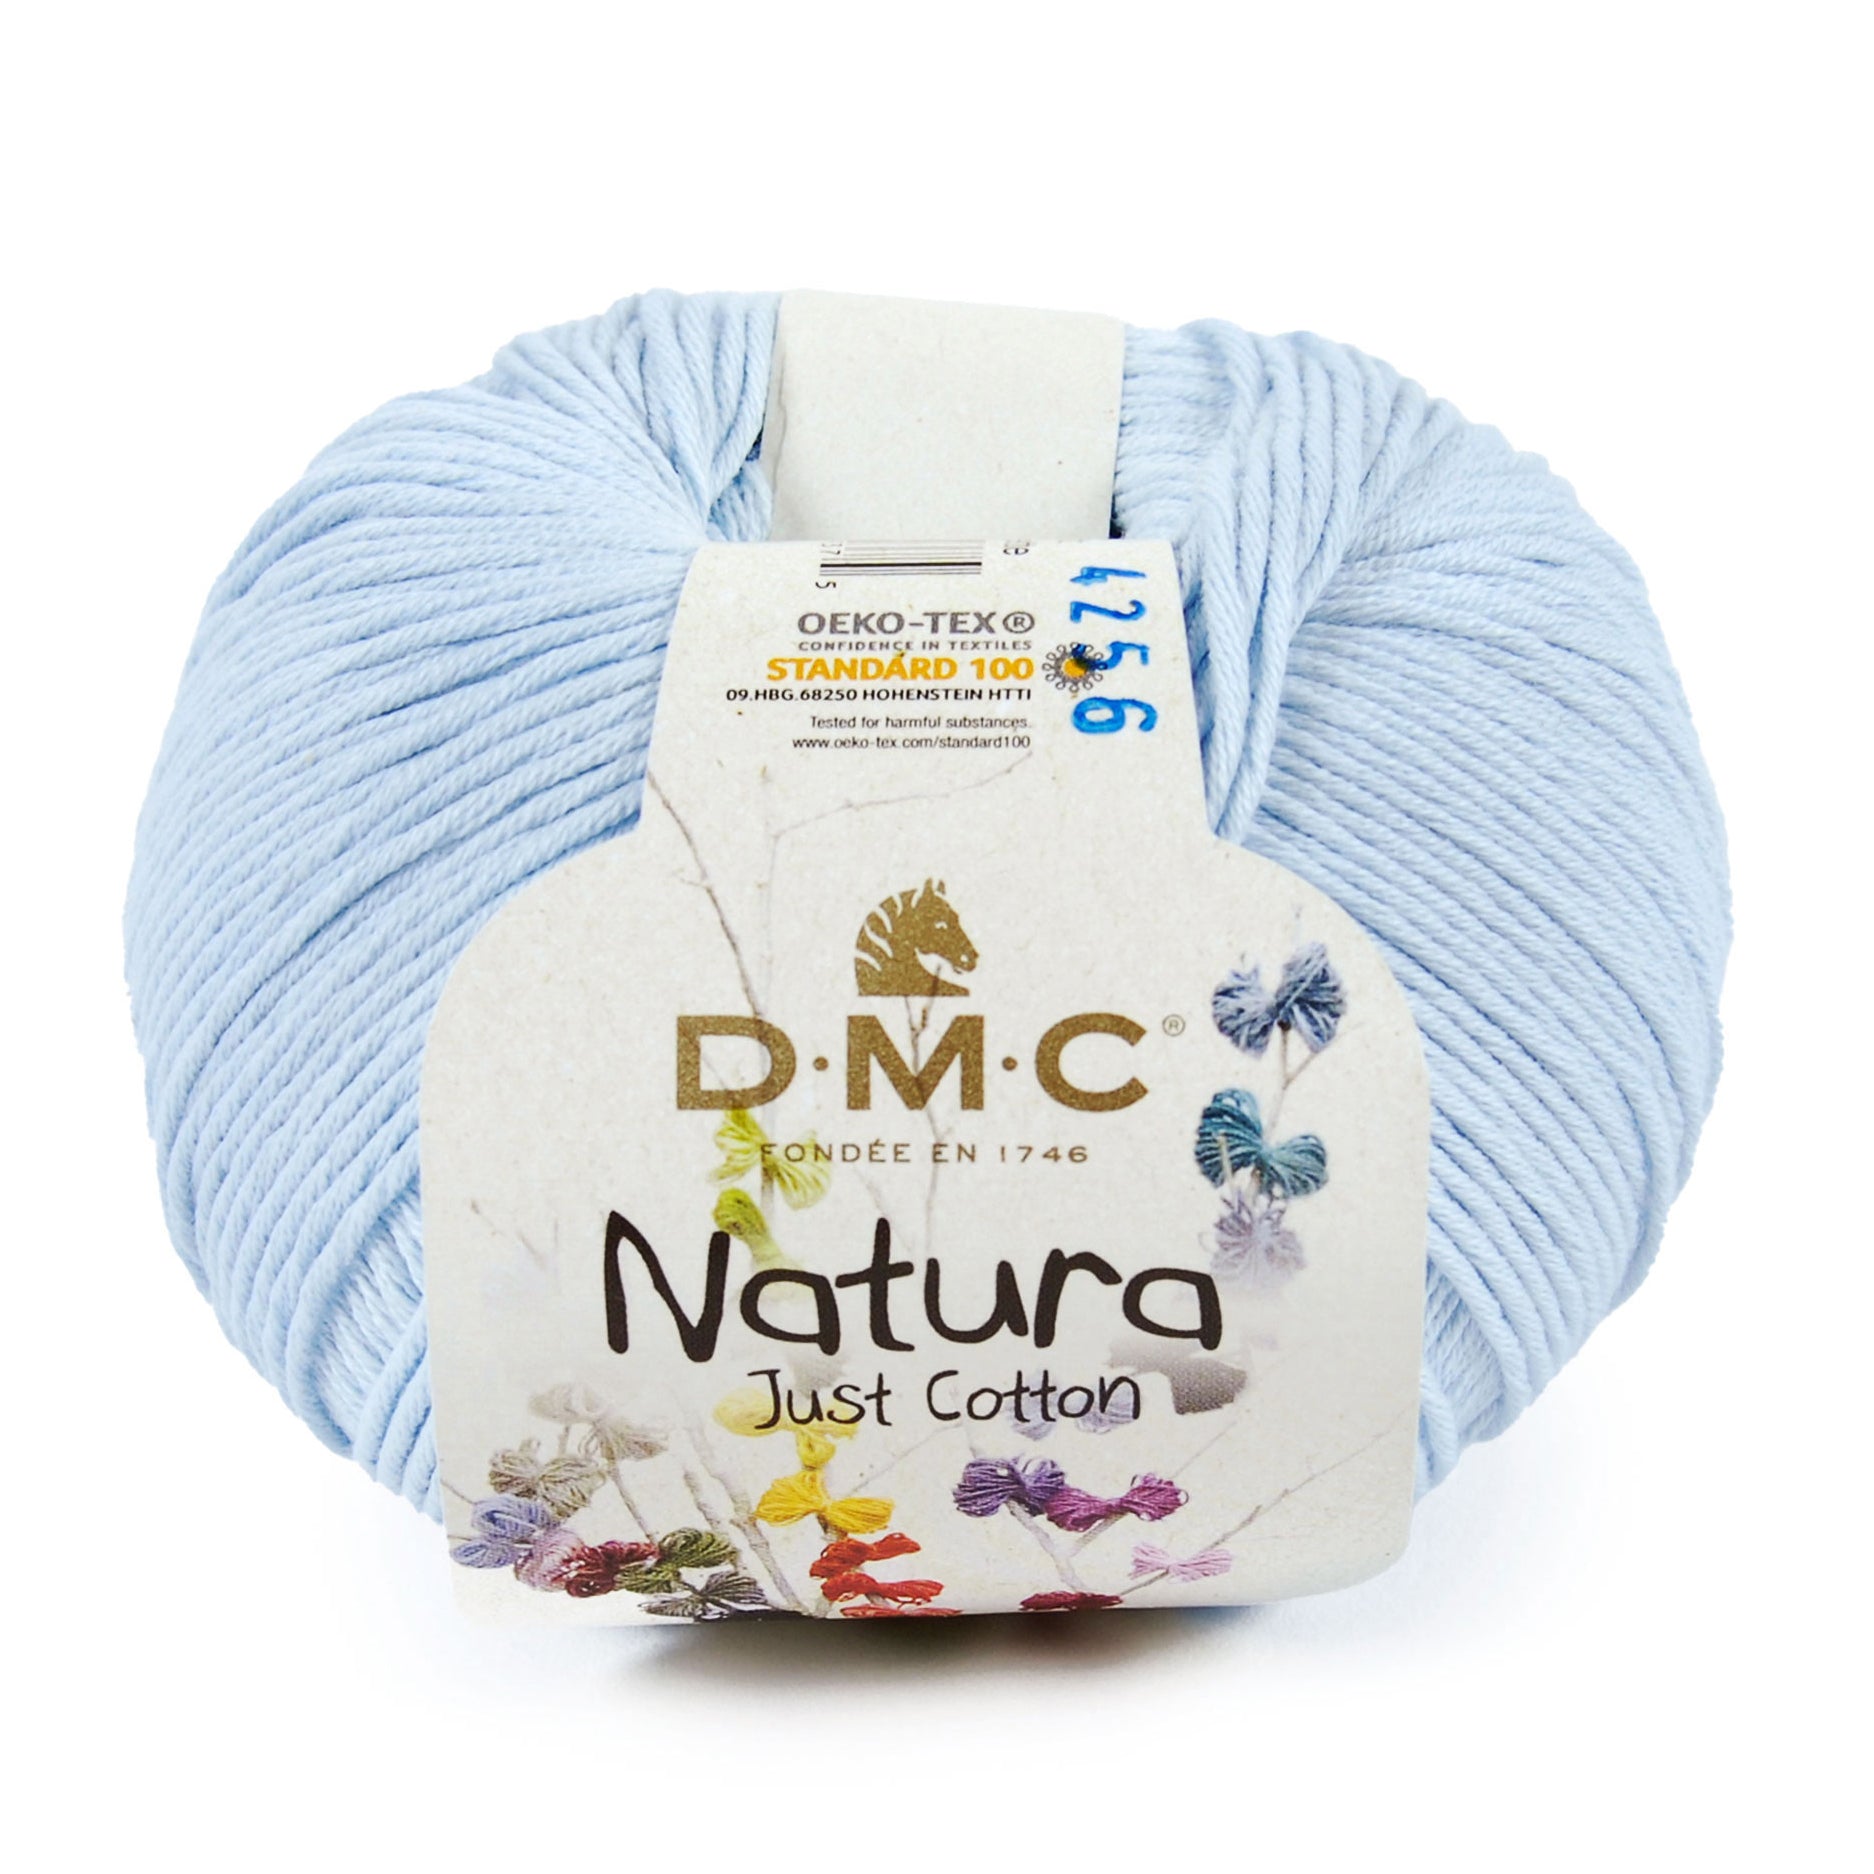 DMC Natura Just Cotton - Hilos para Tricot y Ganchillo 100% Algodon